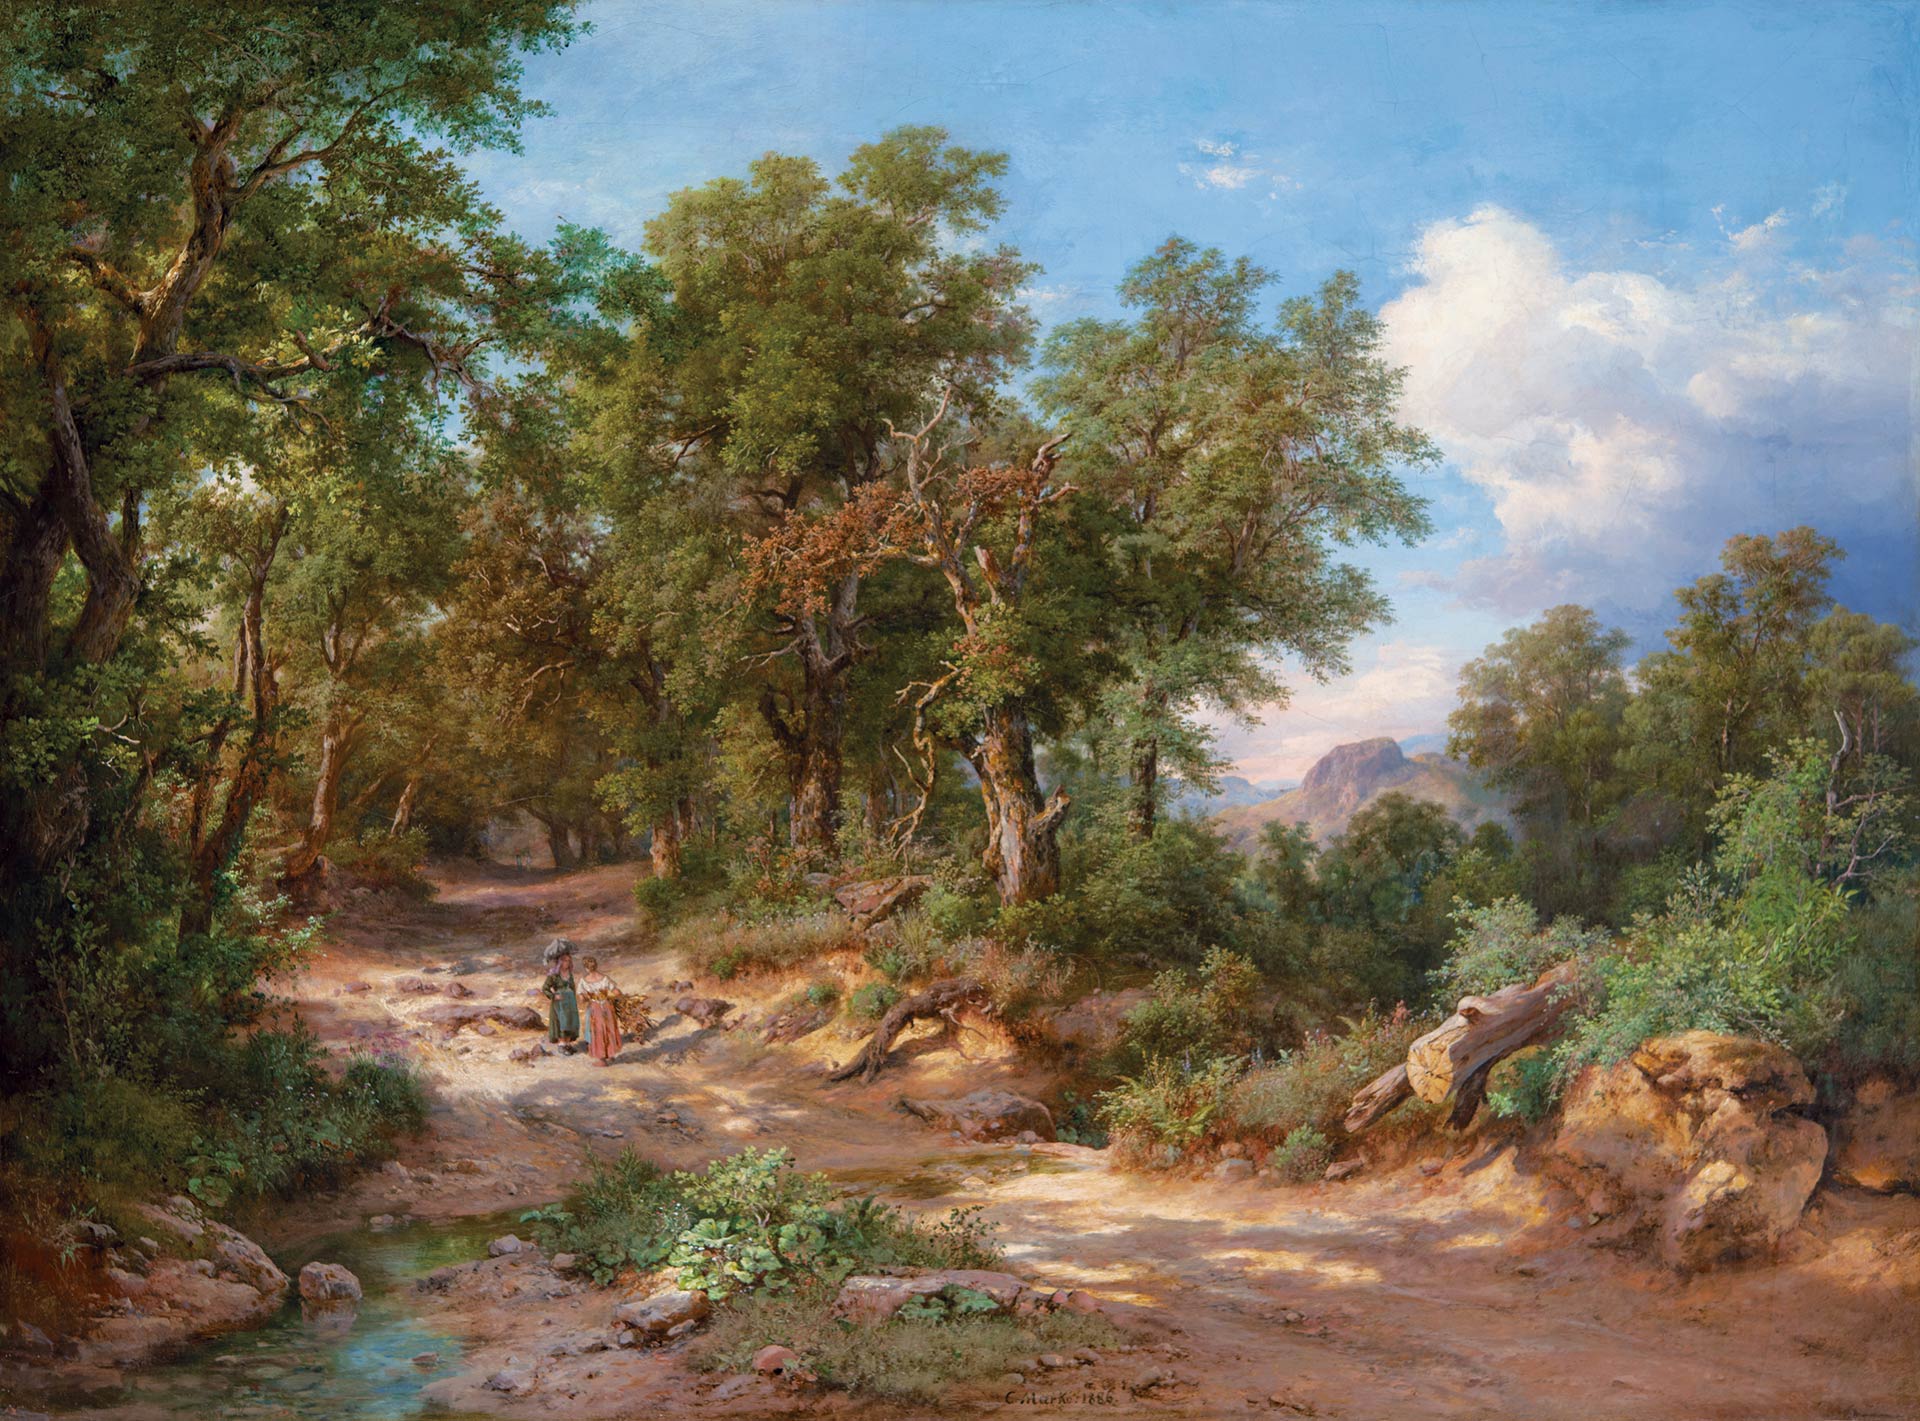 Markó Károly, Ifj. (1822 - 1891) Forest path, 1886